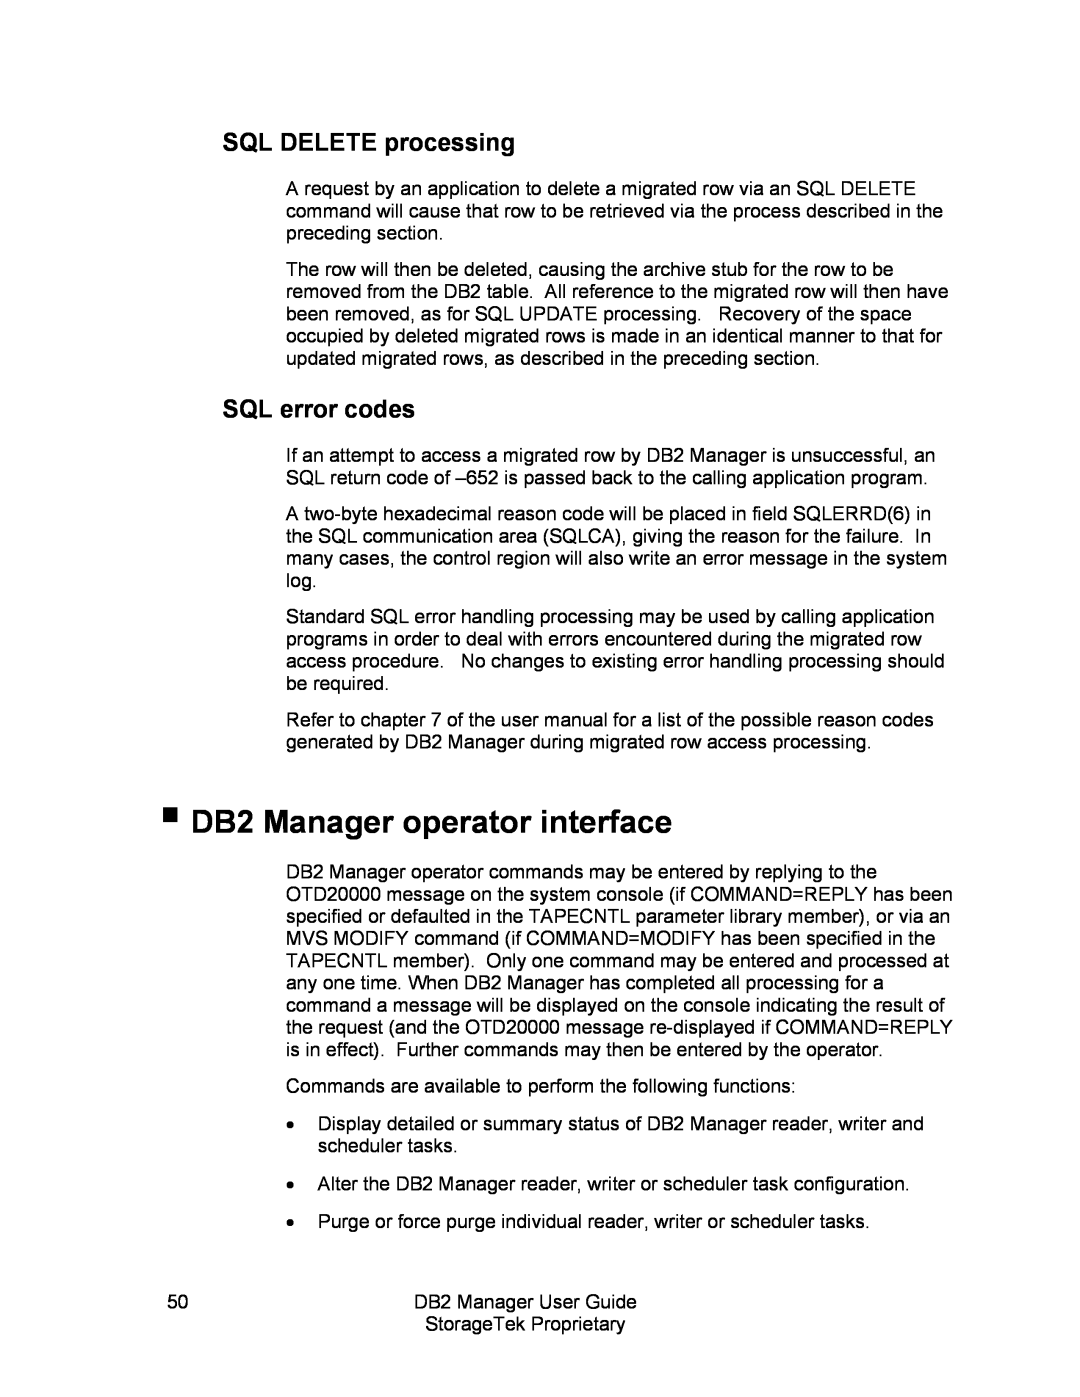 StorageTek 312564001 manual DB2 Manager operator interface, SQL DELETE processing, SQL error codes 